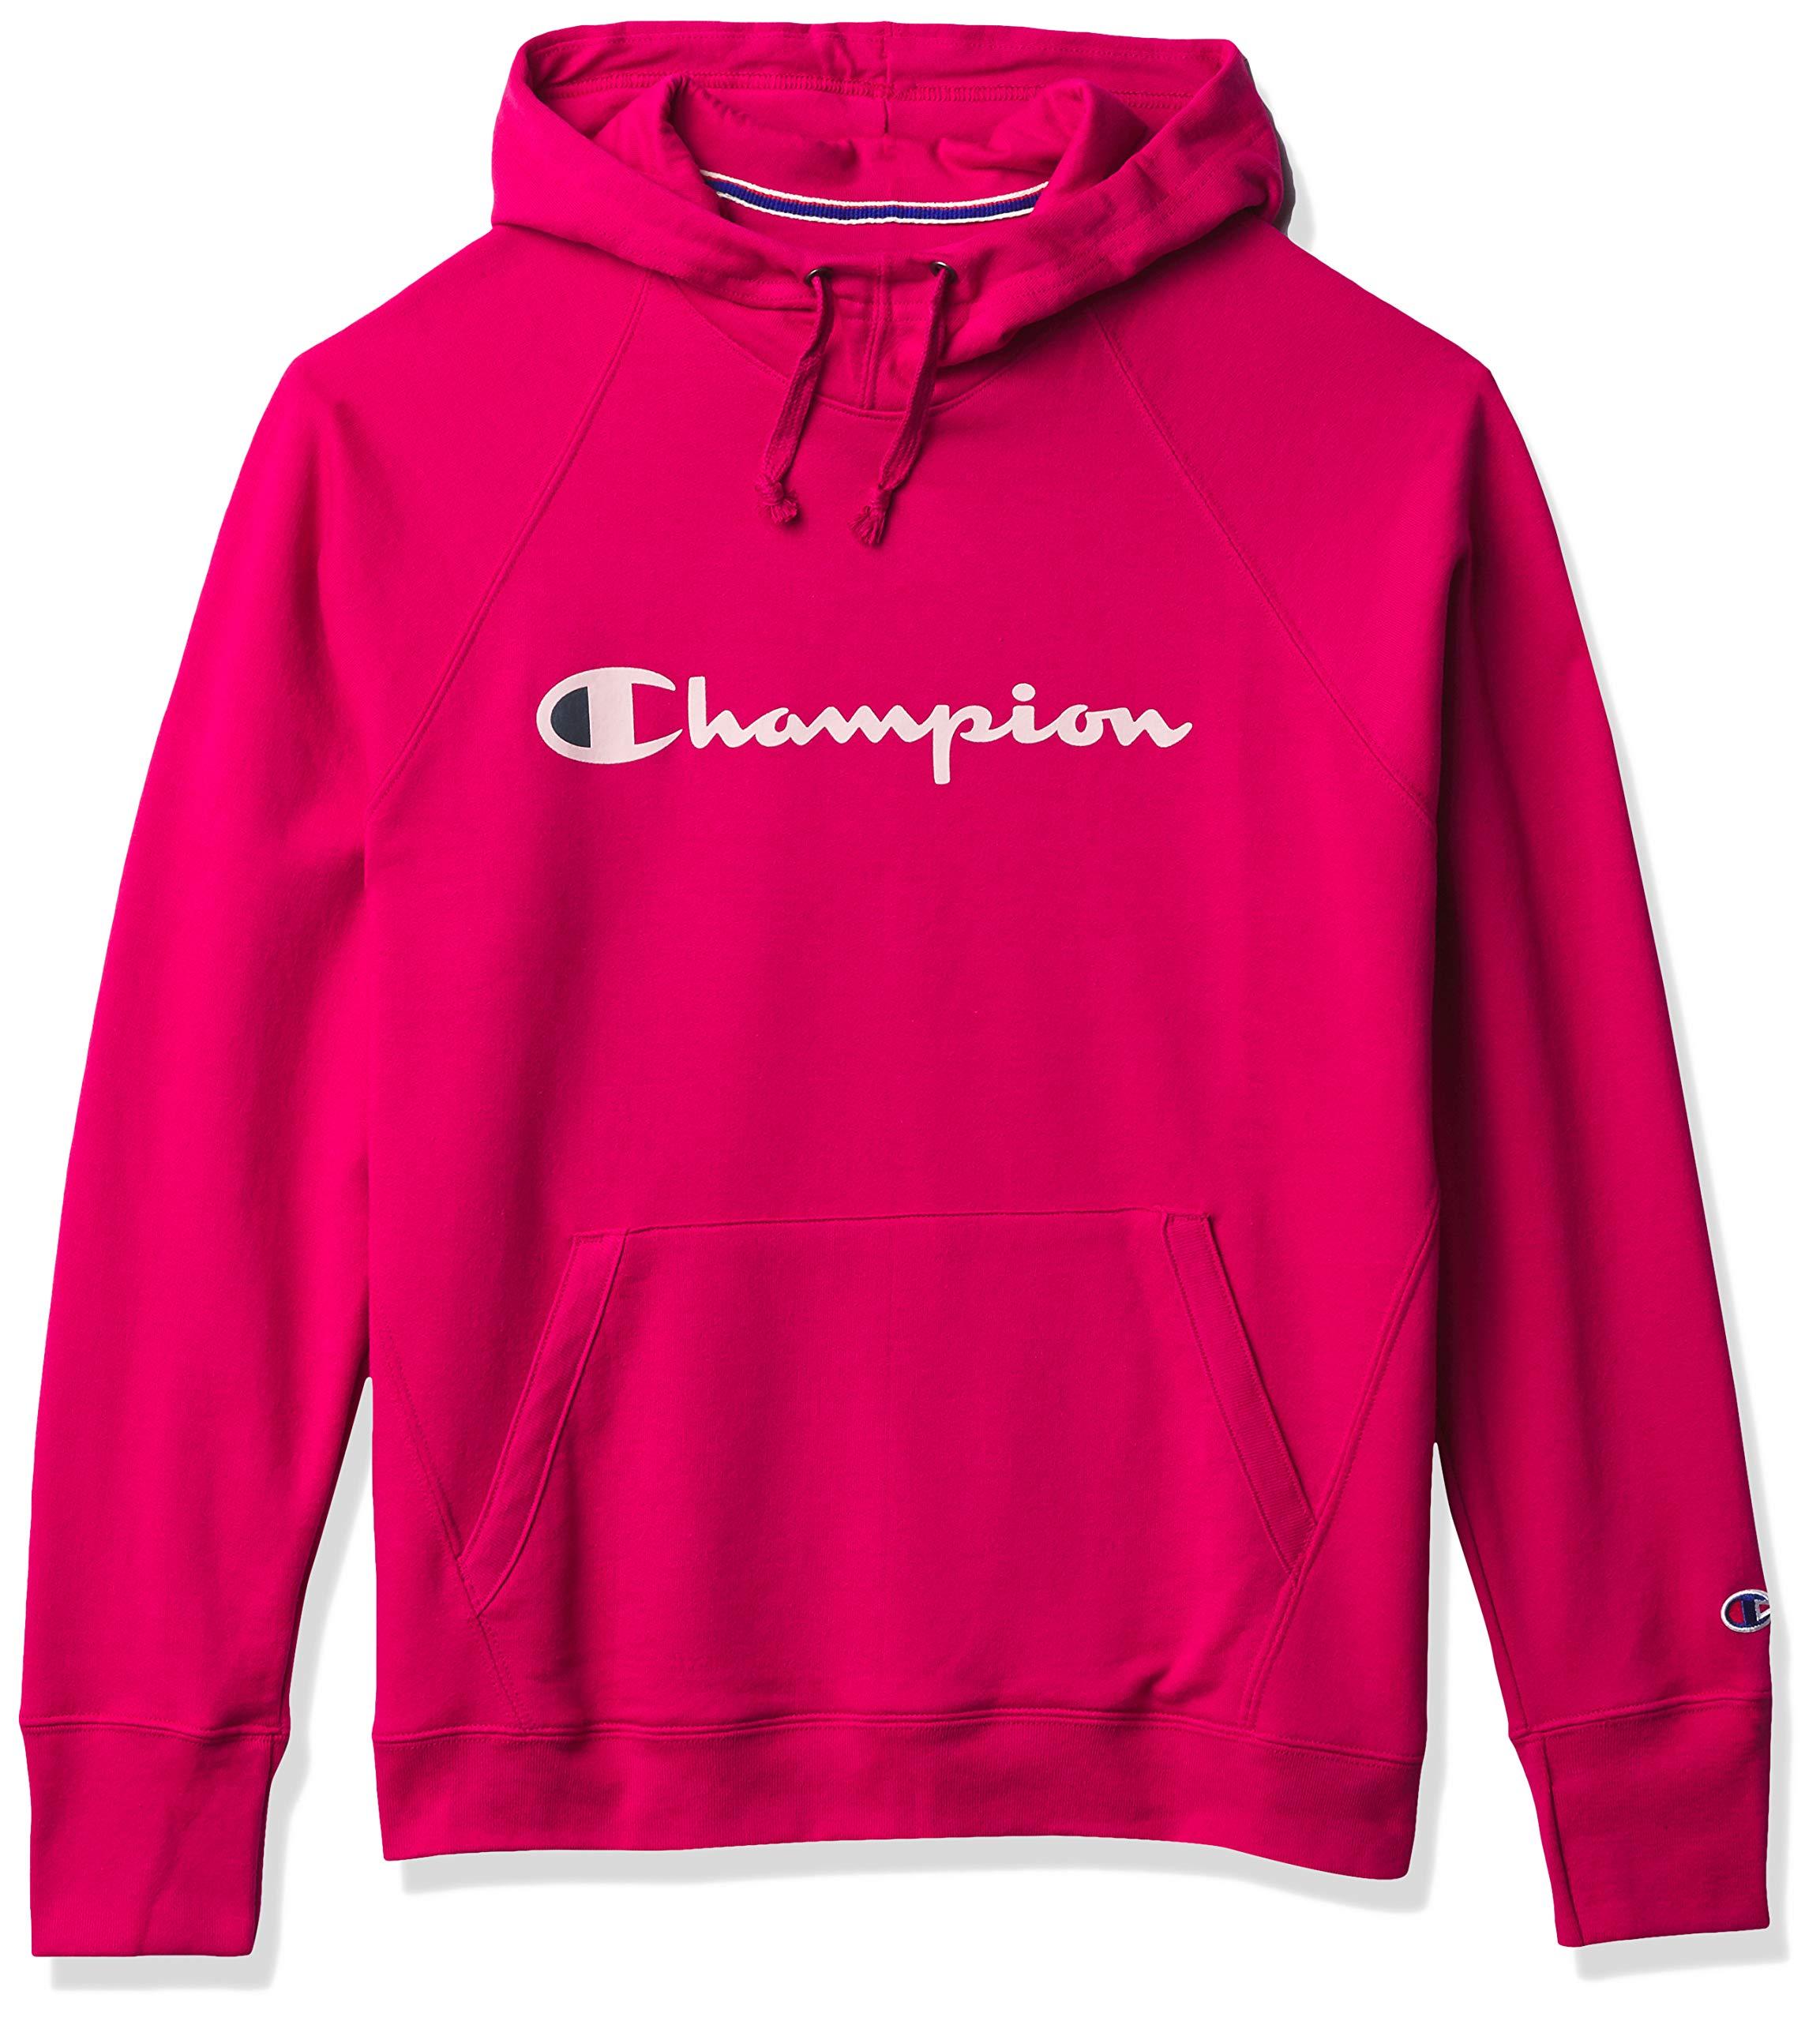 Champion Hoodie in Deep Raspberry (Pink) - Save 20% - Lyst